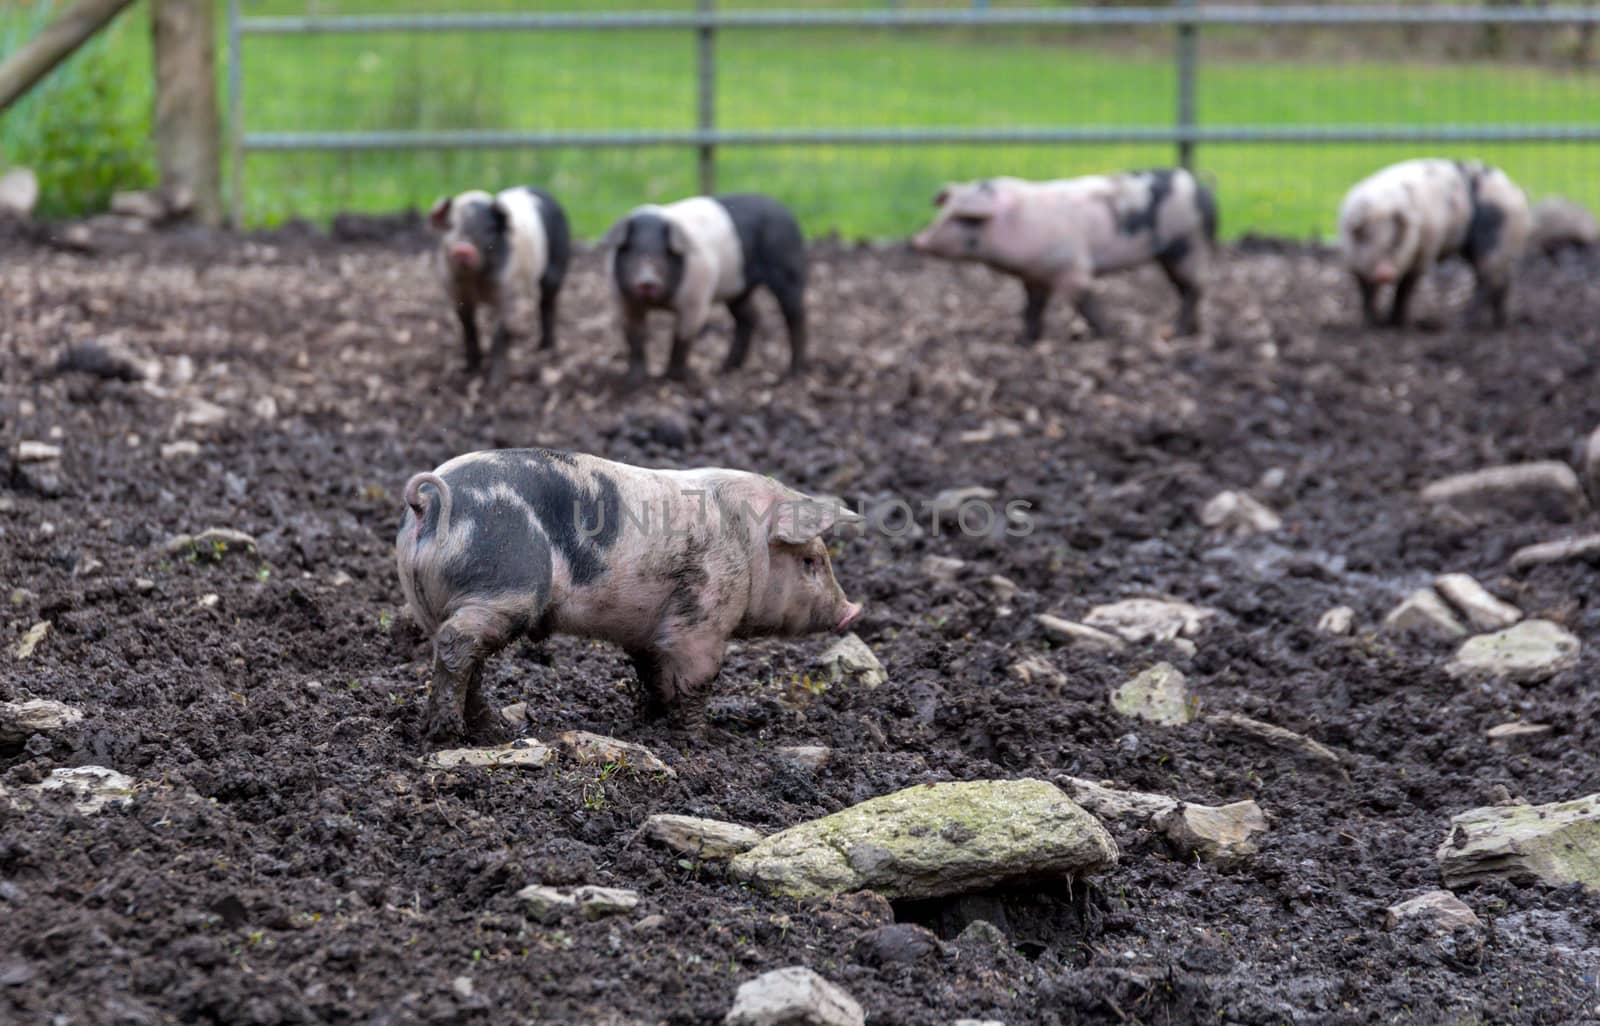 Saddleback piglets in a muddy pig pen